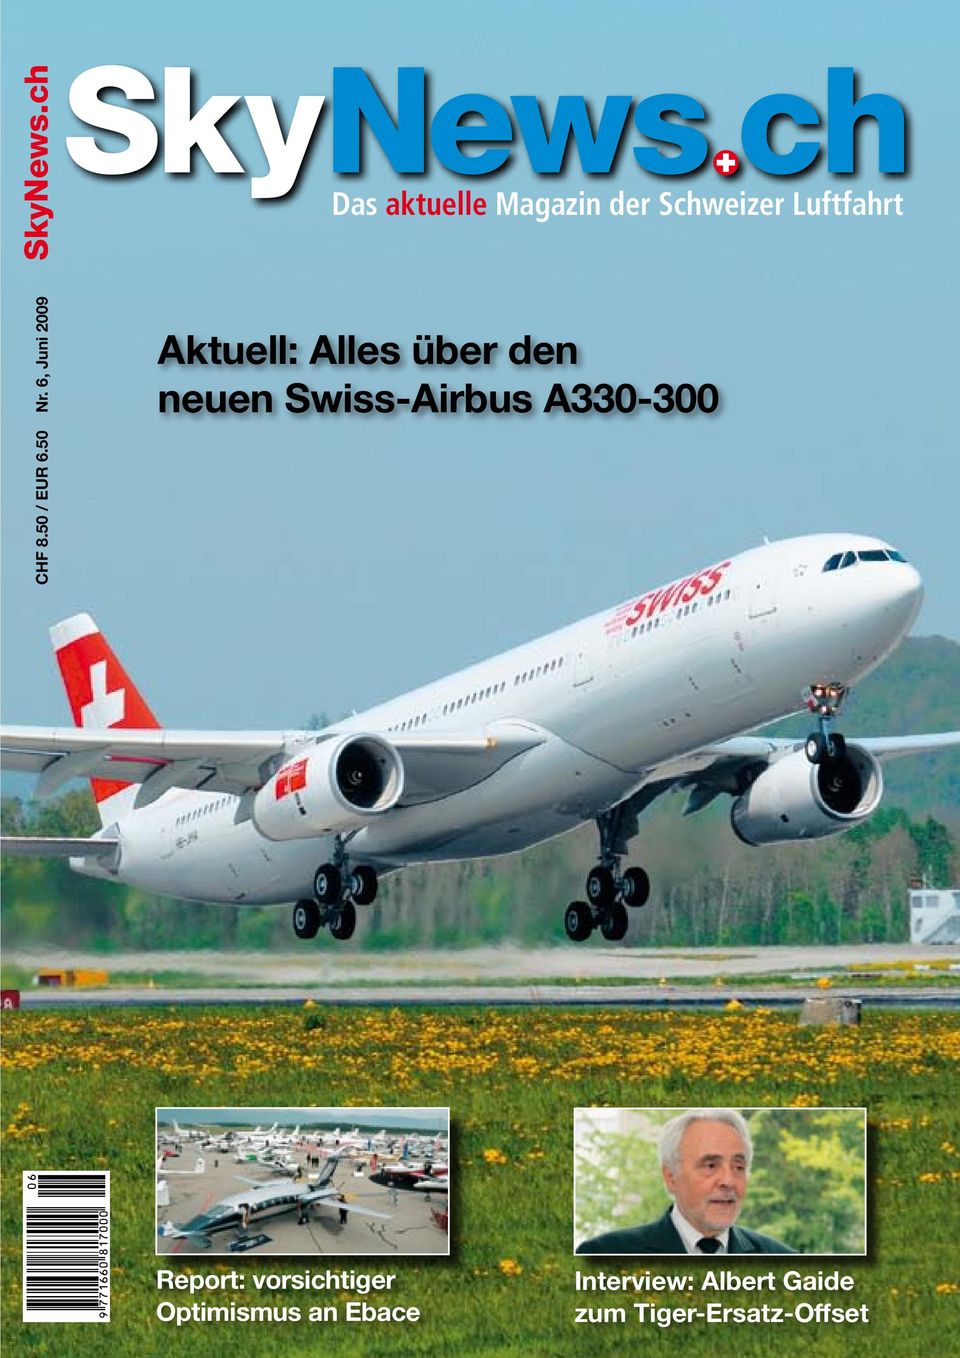 Alles über den neuen Swiss-Airbus A330-300 Report: